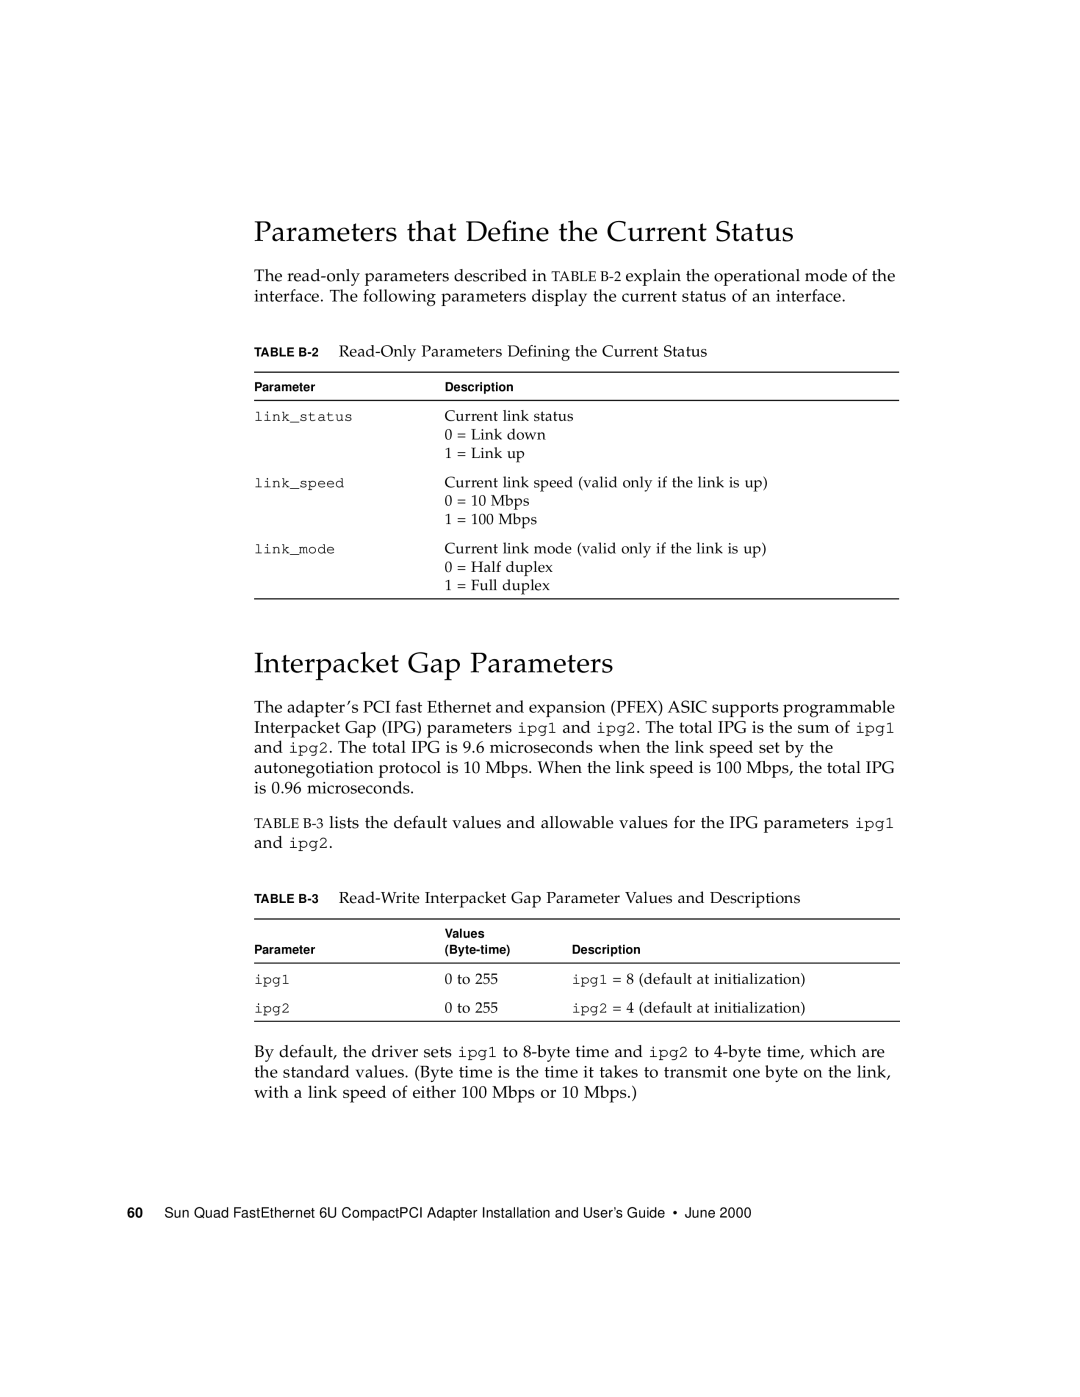 Sun Microsystems 6U manual Parameters that Define the Current Status, Interpacket Gap Parameters 